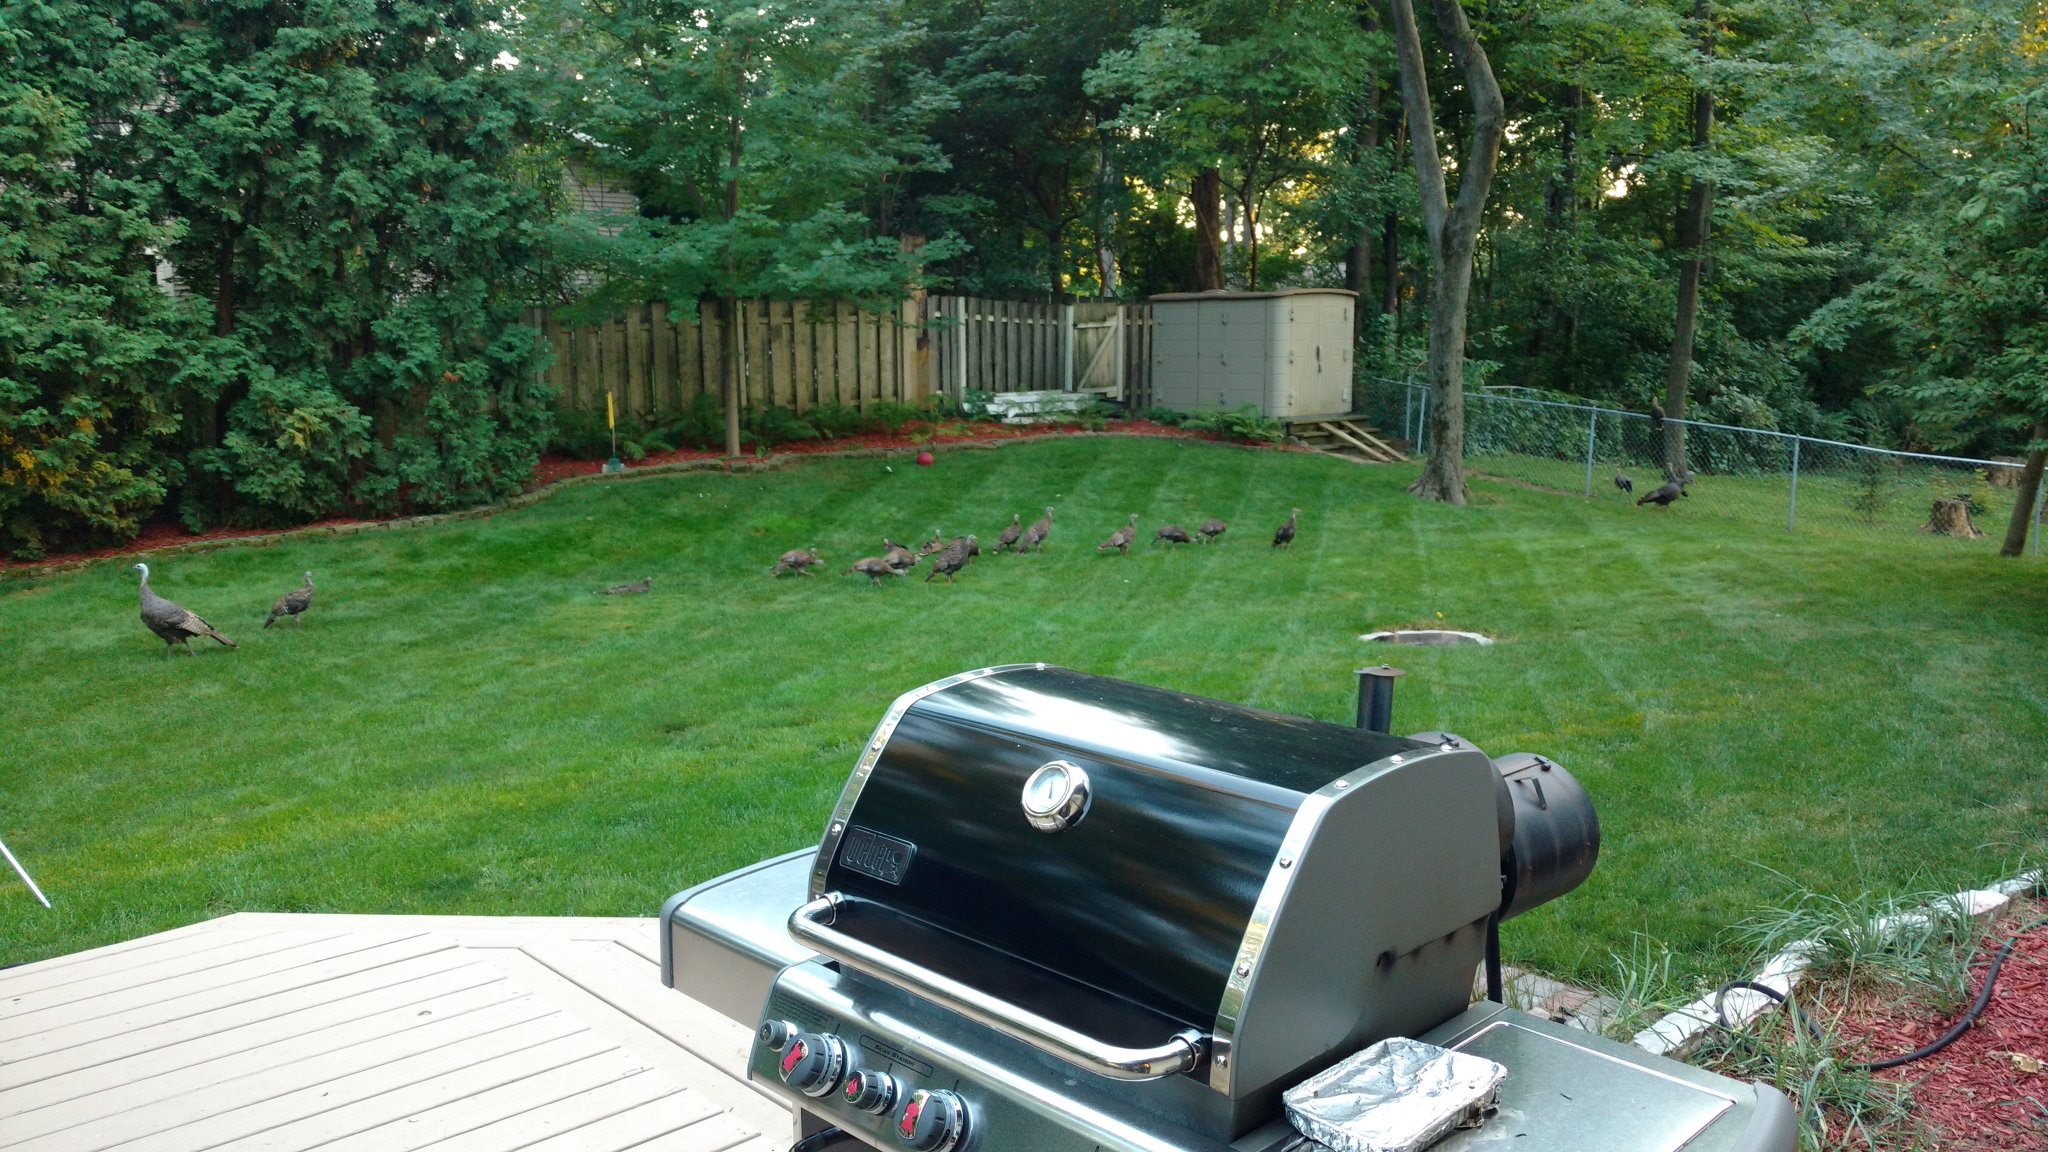 Turkeys in Yard.jpg